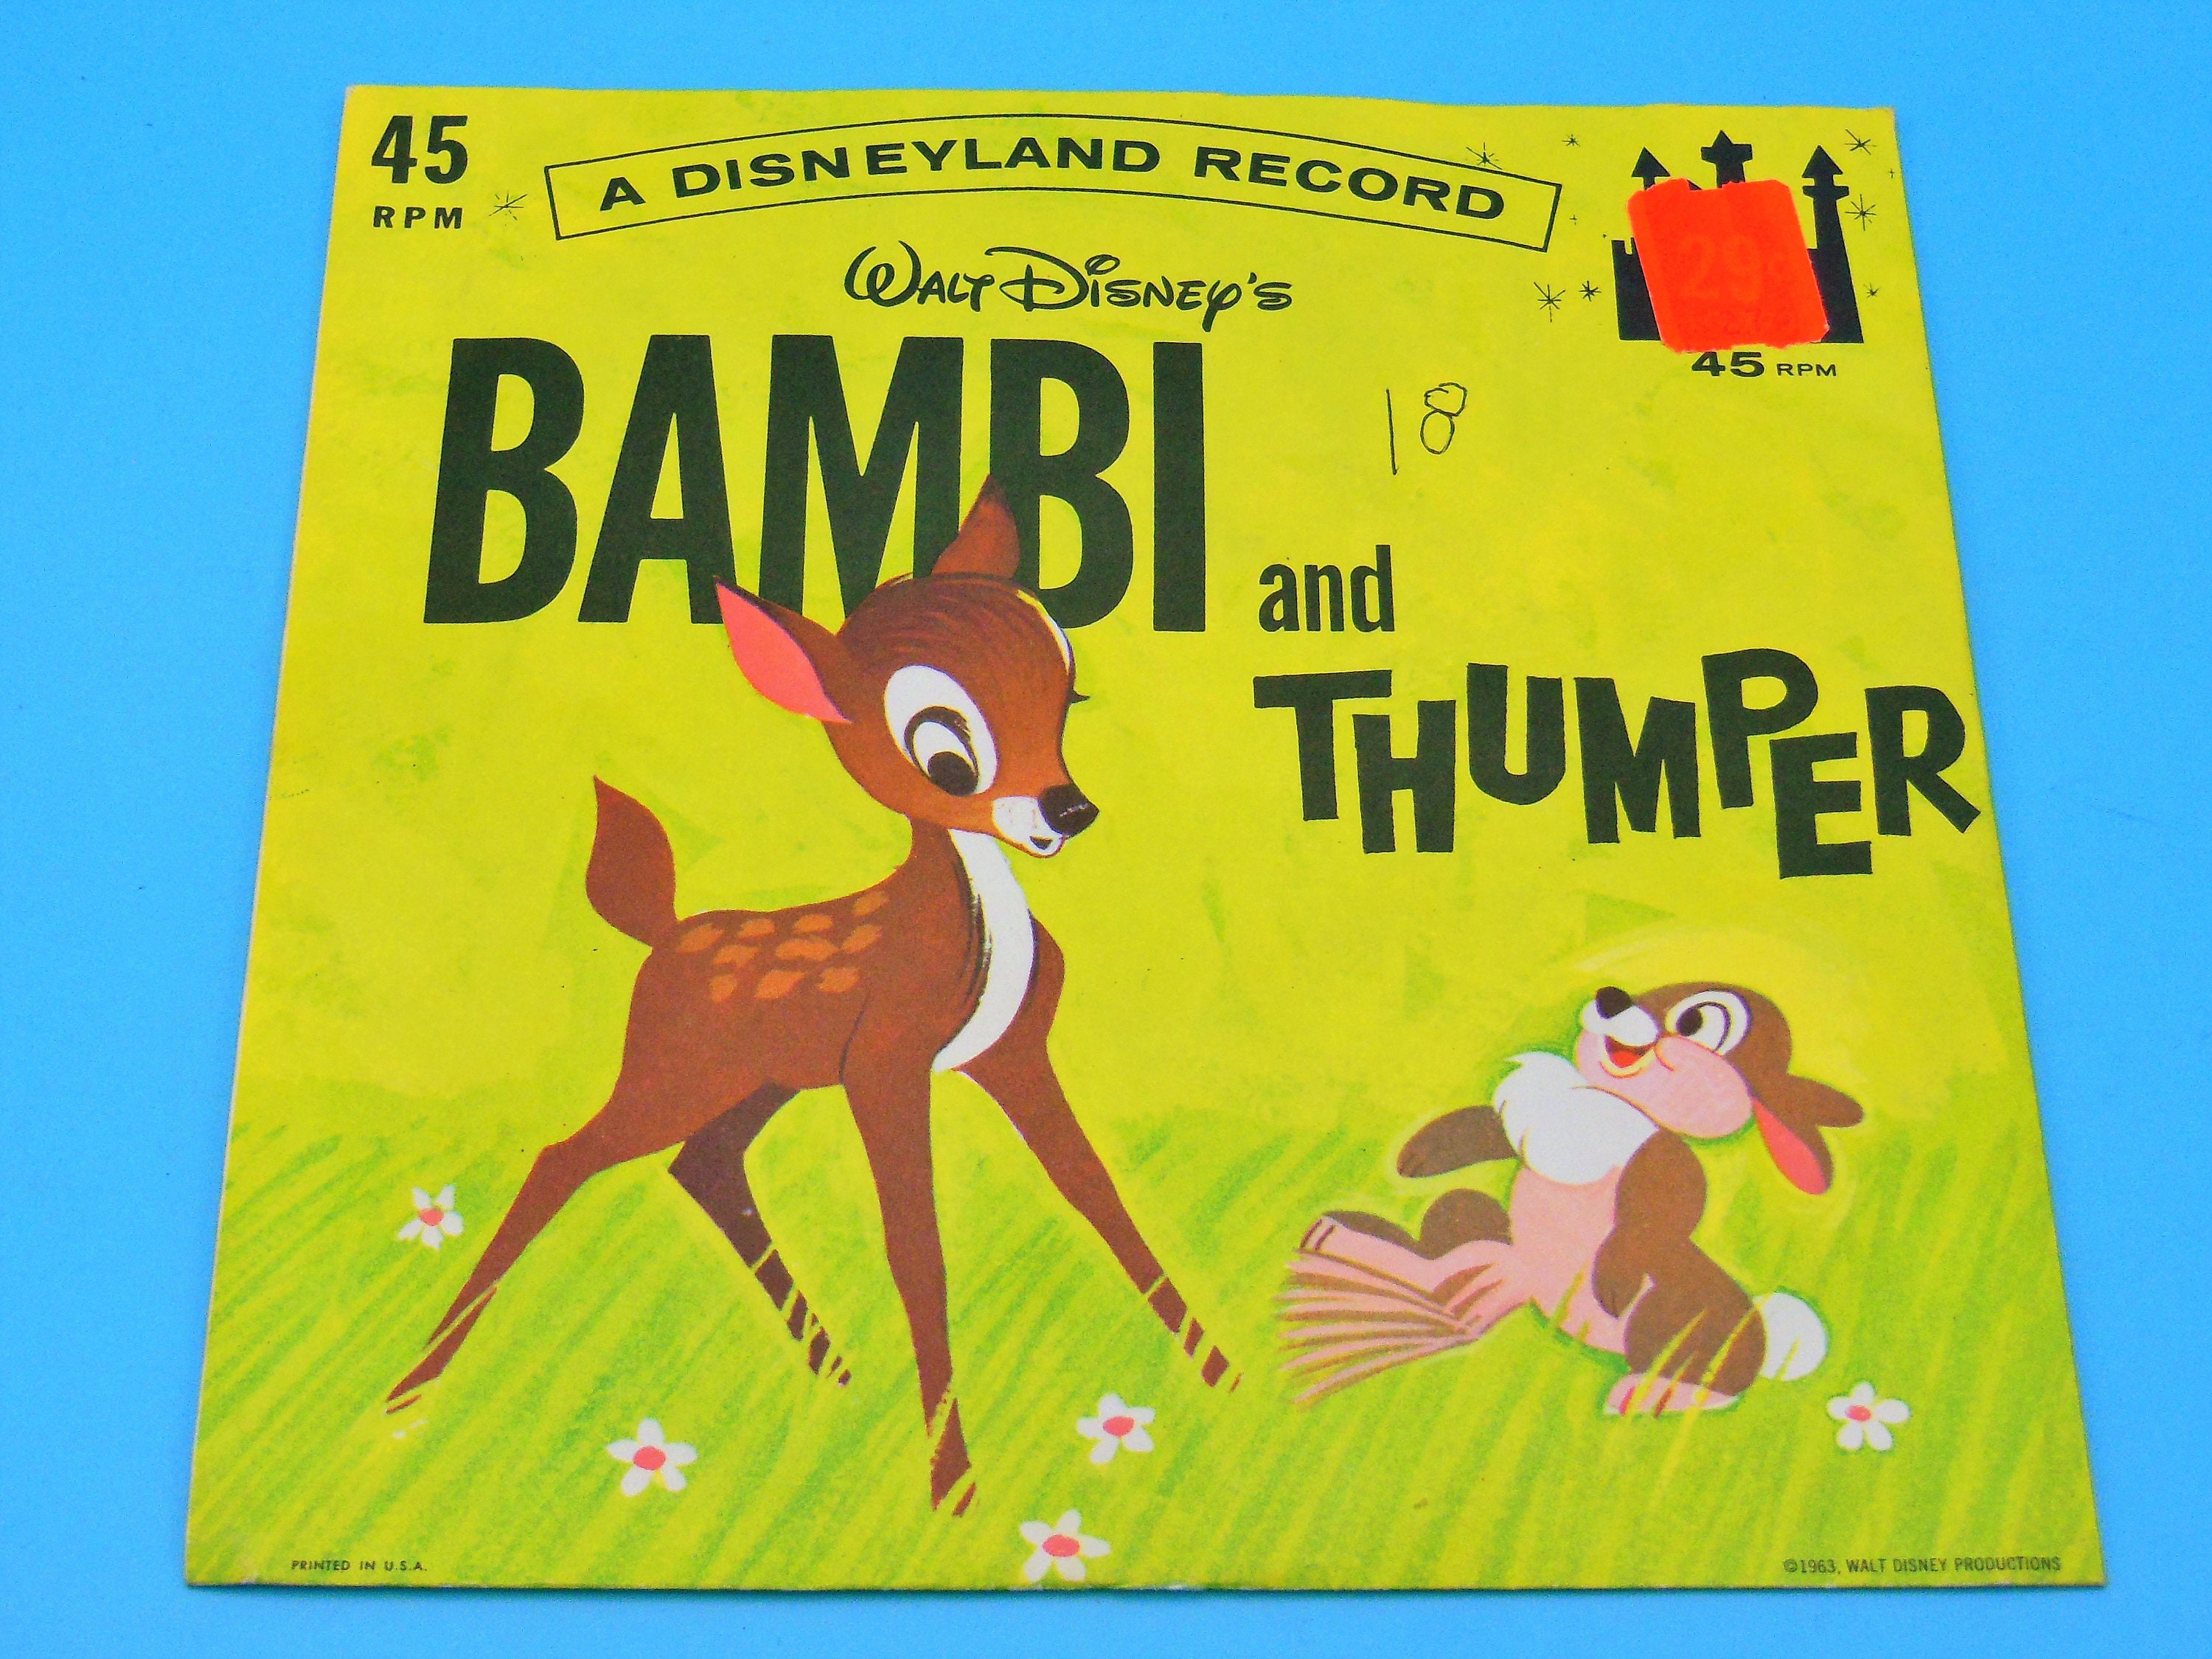 Vinyle 45 tours Disney® Bambi - Mademoiselle Pépite